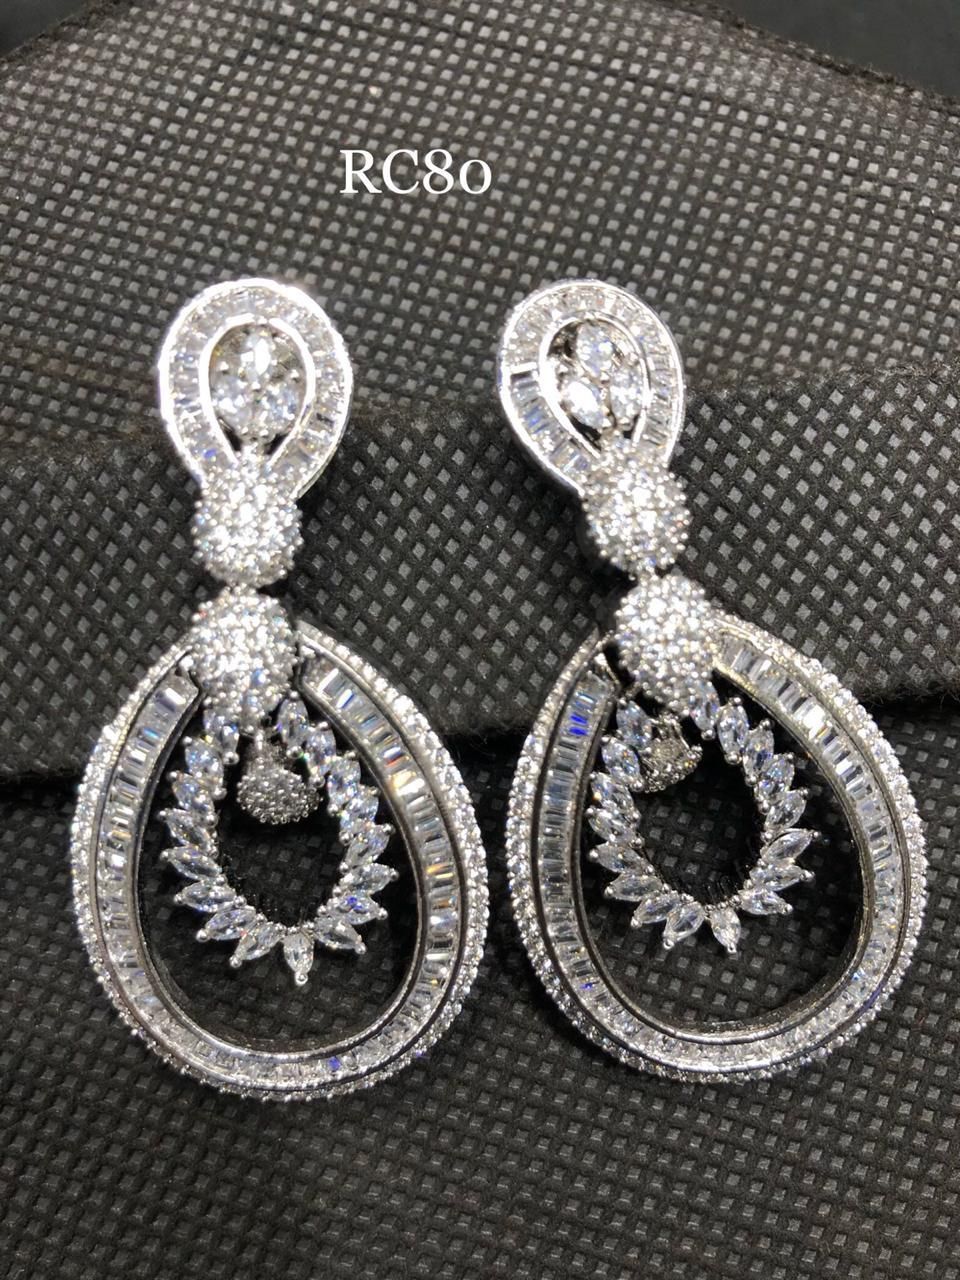 Photo From CZ Earrings - By Jain Jewels